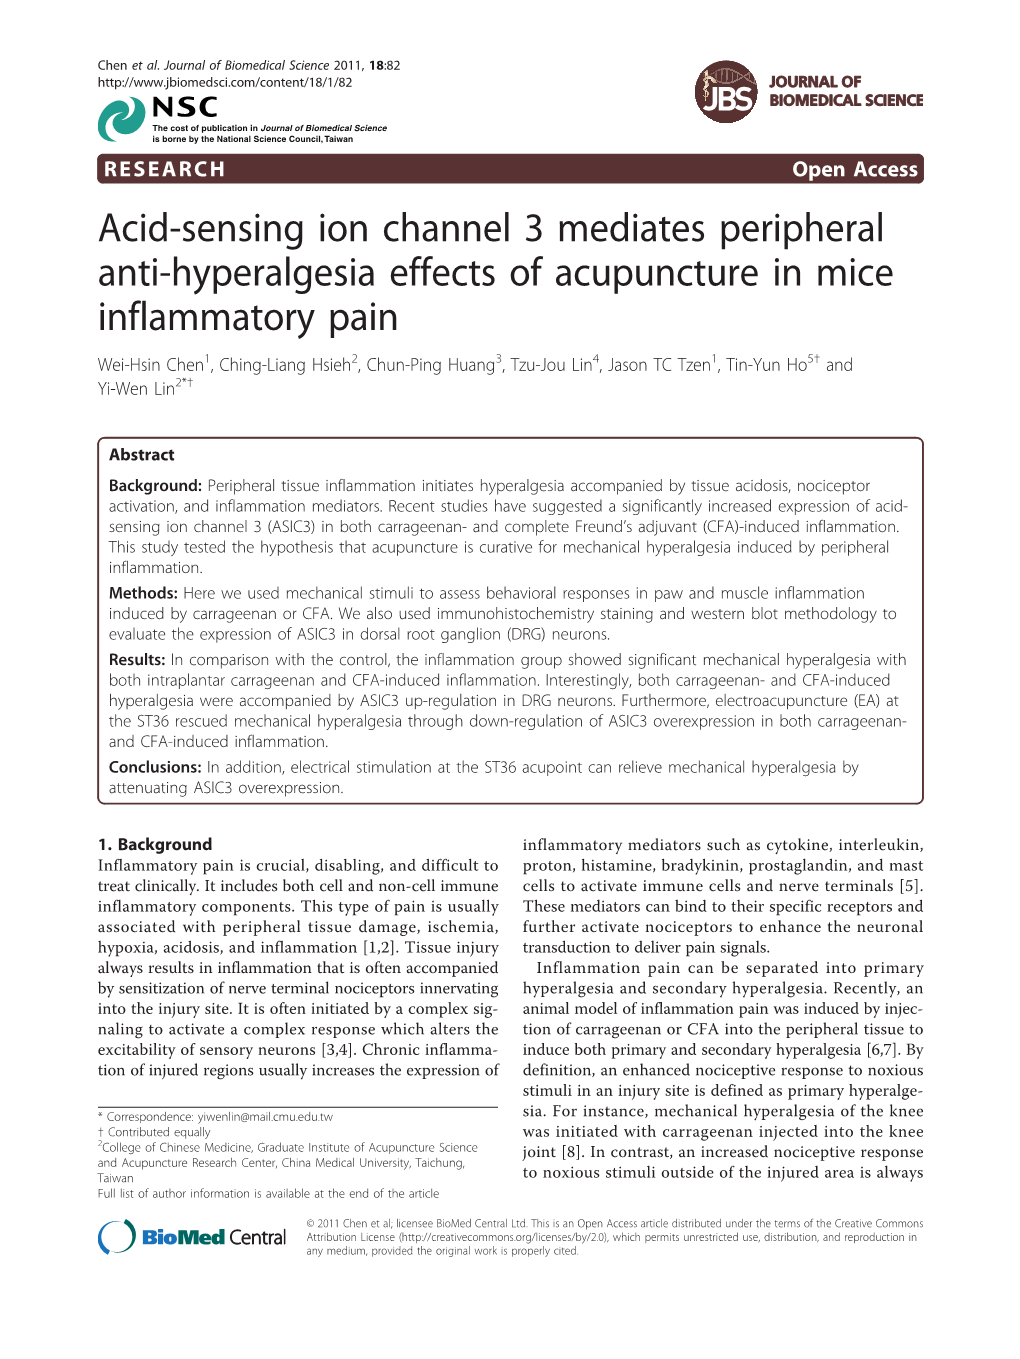 Acid-Sensing Ion Channel 3 Mediates Peripheral Anti-Hyperalgesia Effects